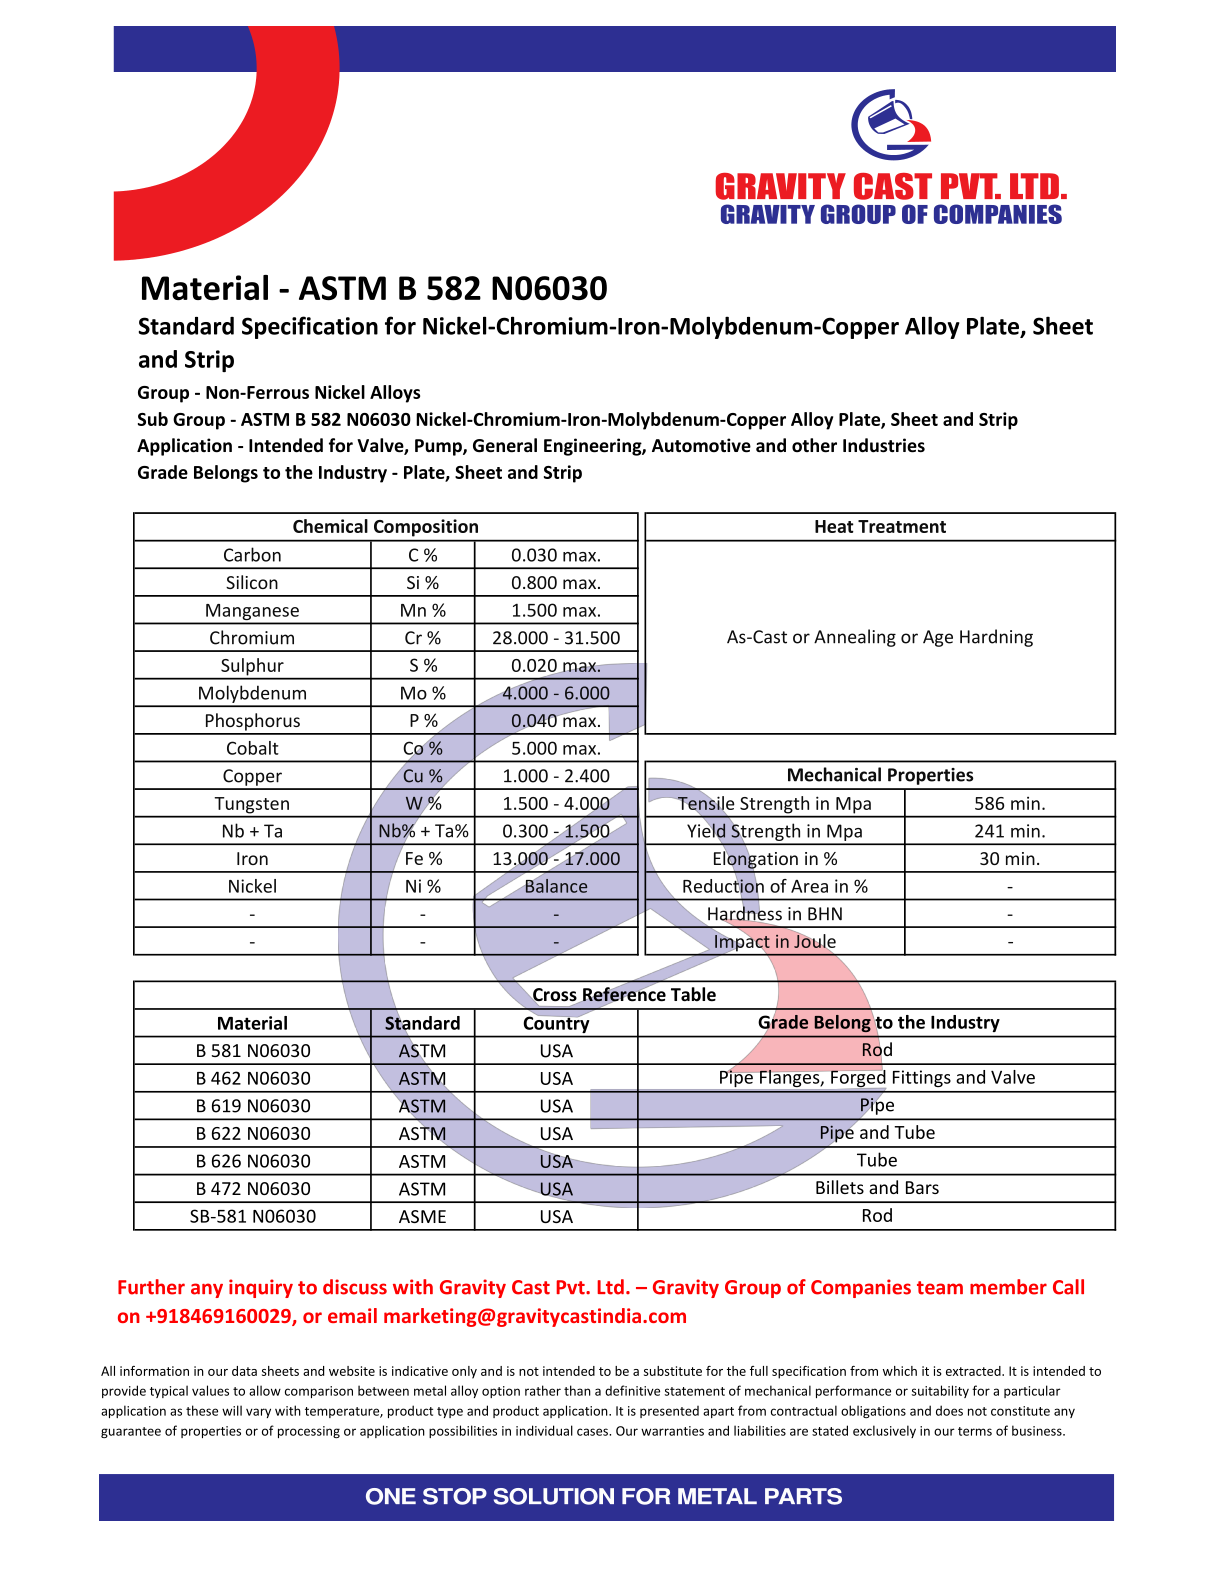 ASTM B 582 N06030.pdf